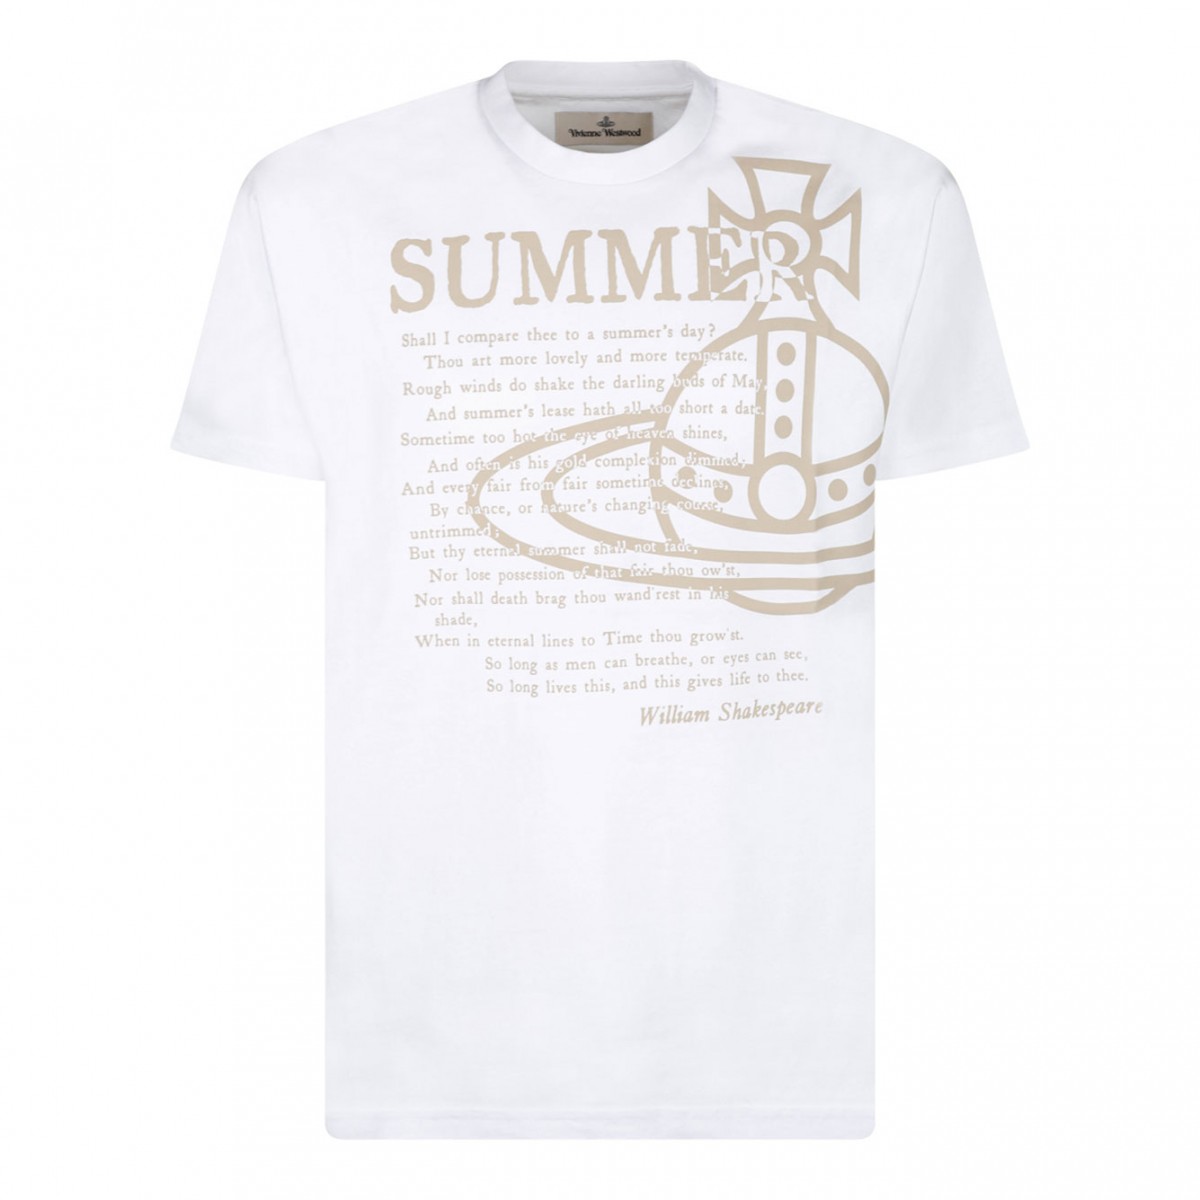 White Summer T-Shirt